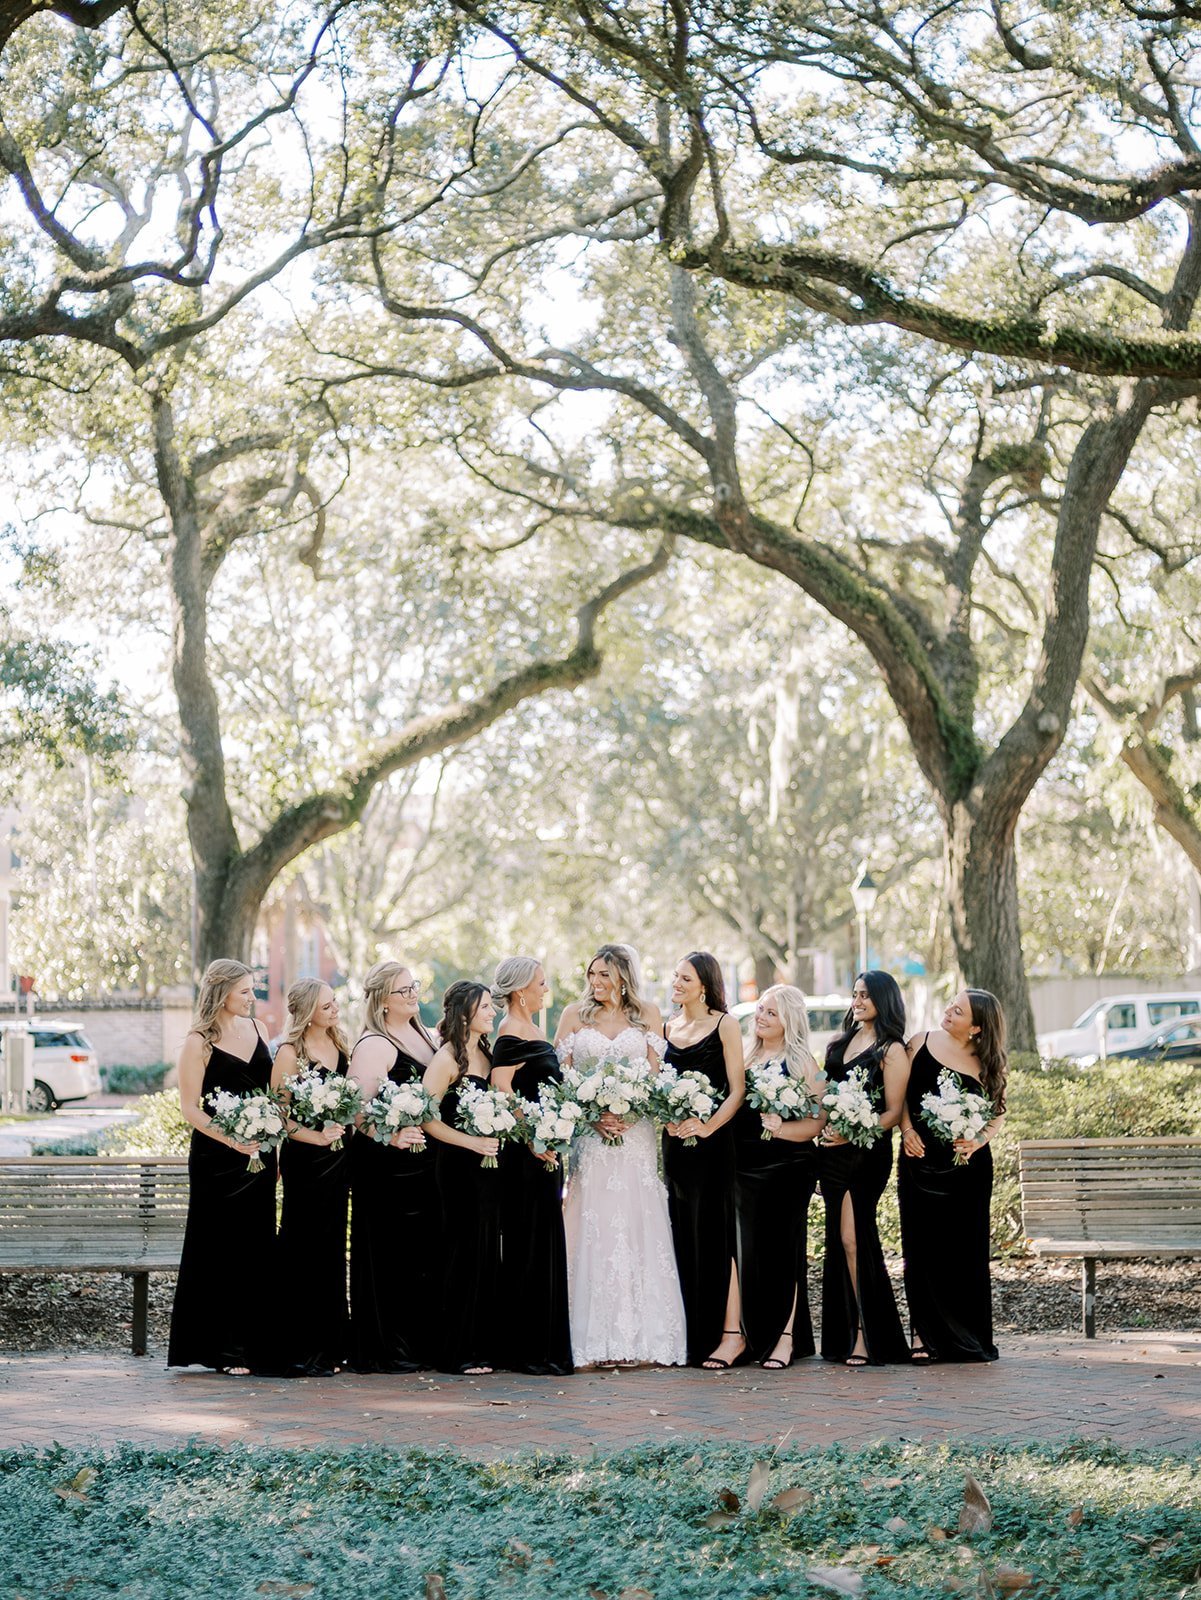 black bridesmaids dresses with white bouquets